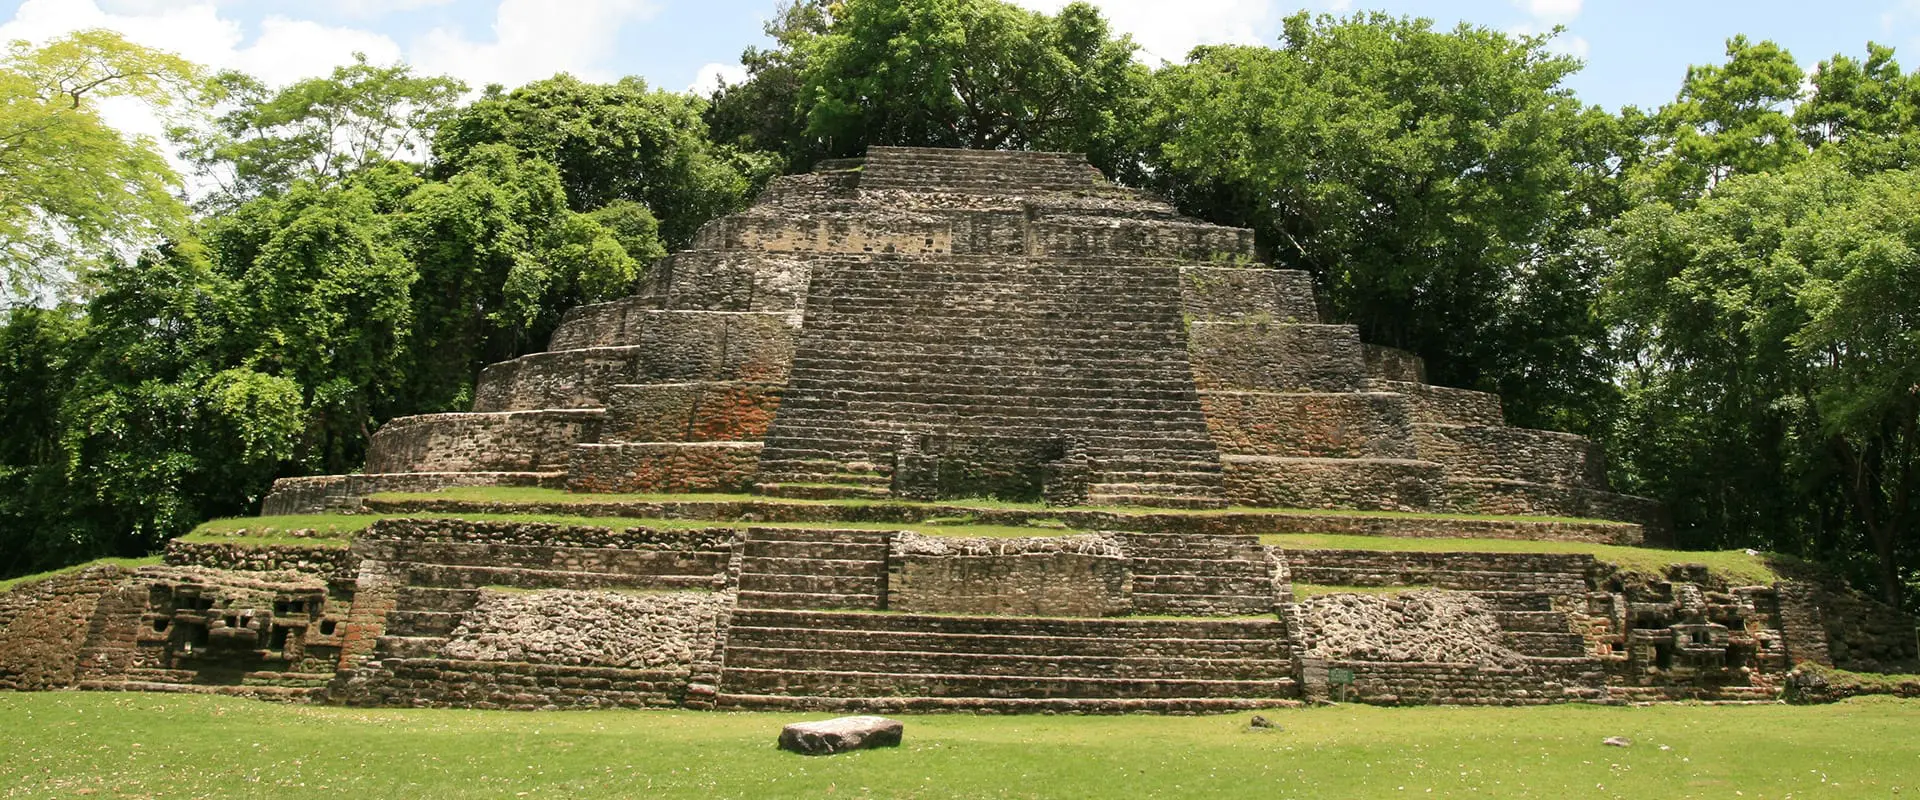 Ancient Mayan ruins in Belize